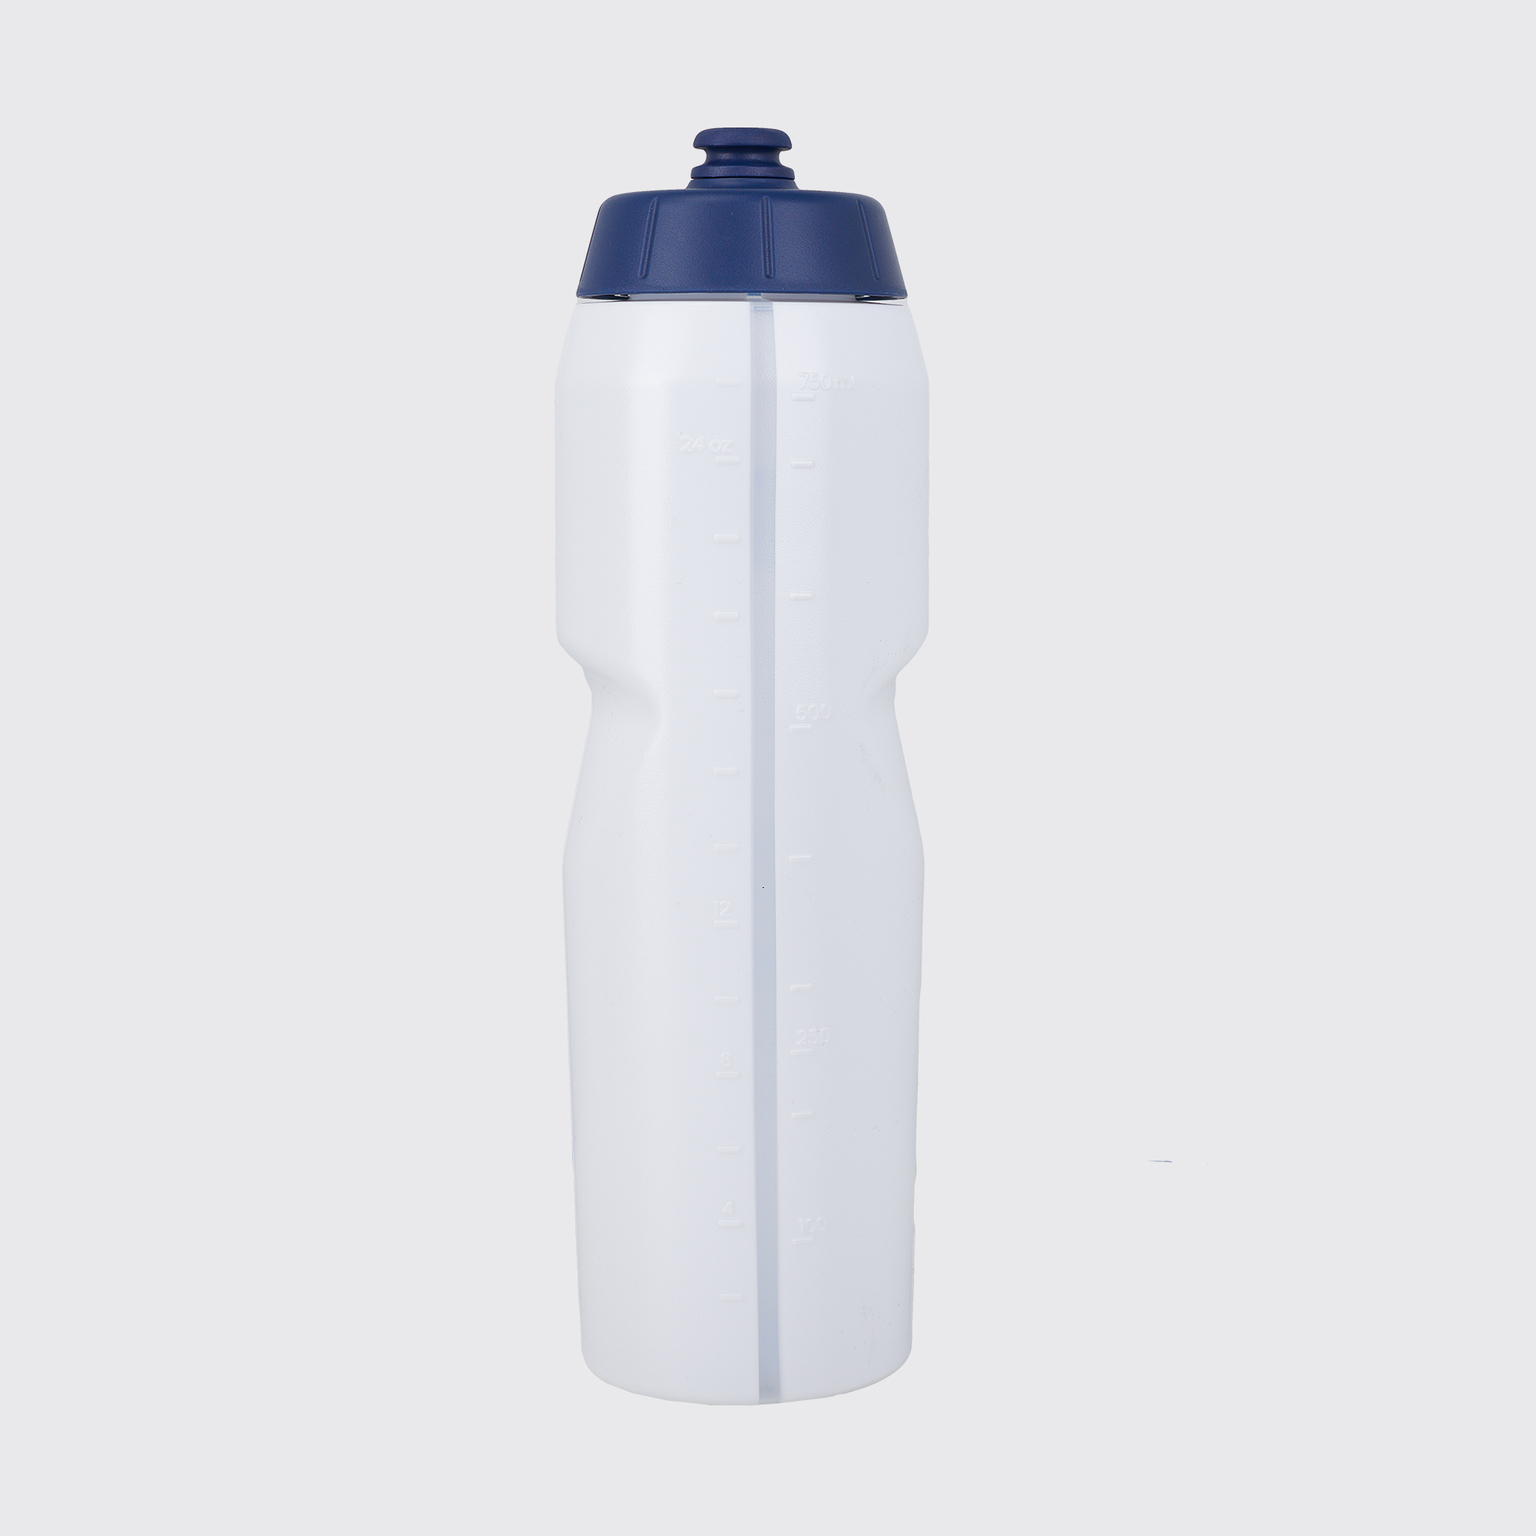 Бутылка для воды Adidas Real Madrid FR9744